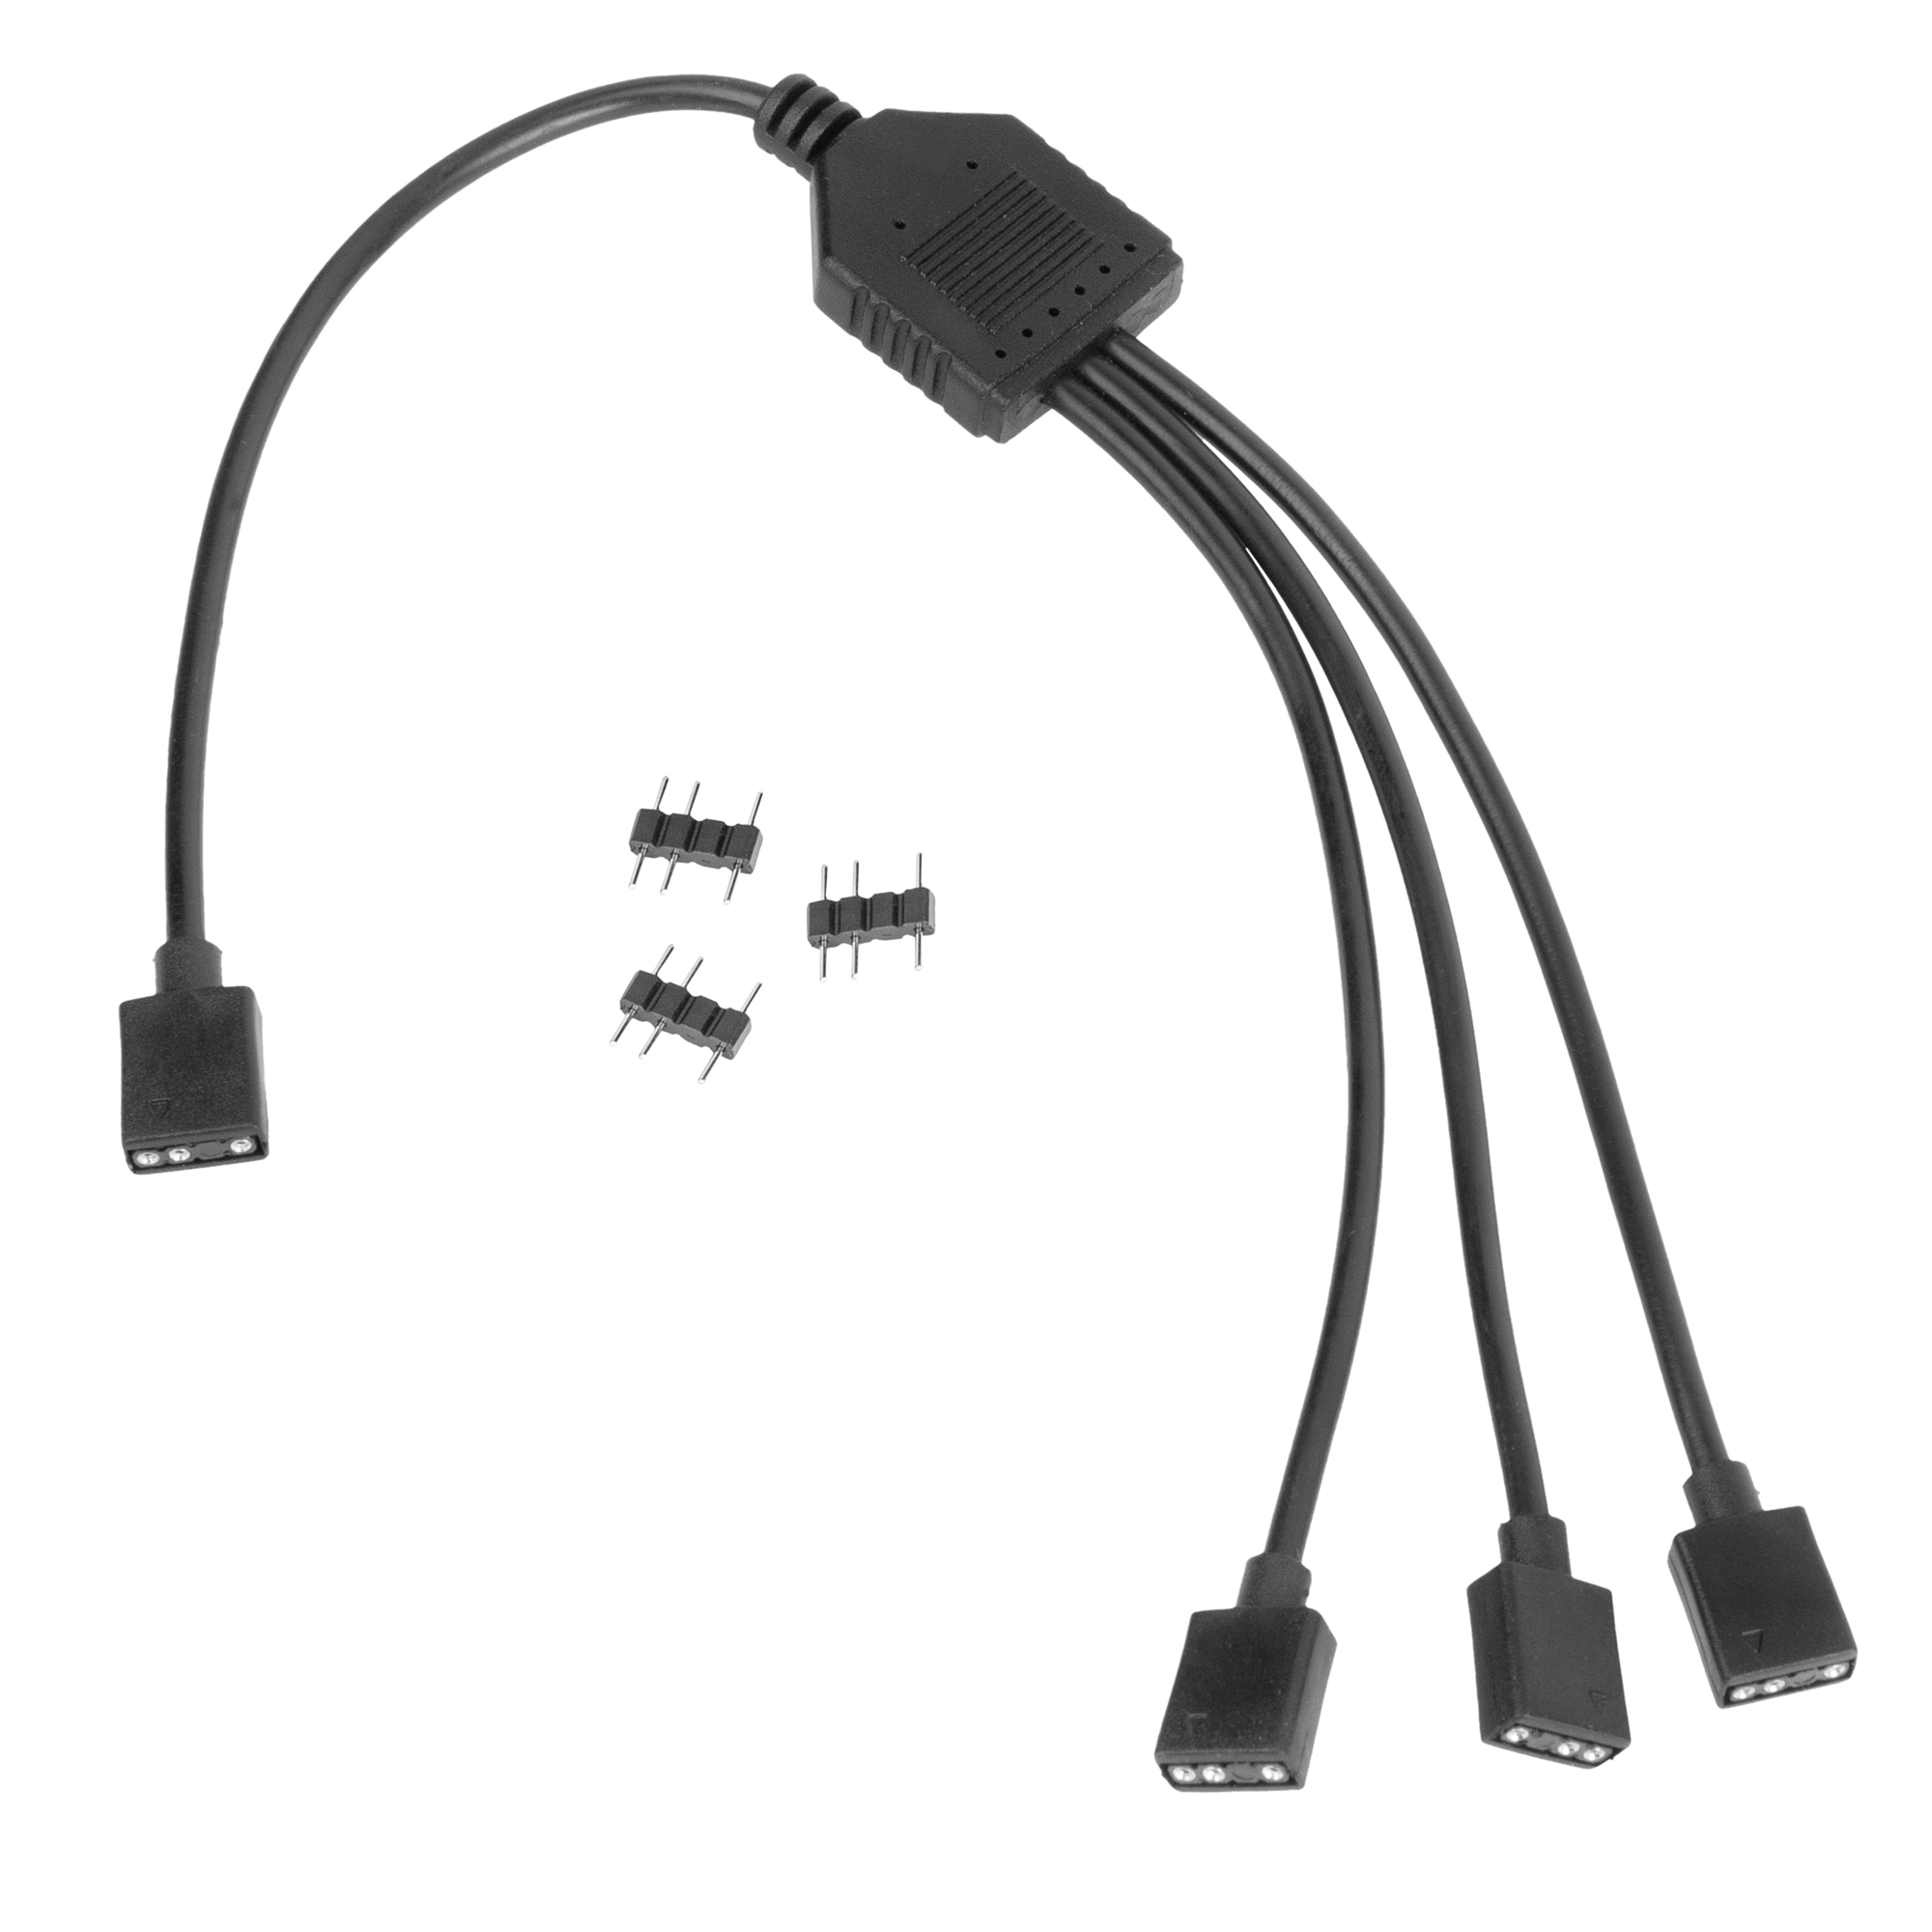 Kolink ARGB 1-3 Splitter Cable - 30cm